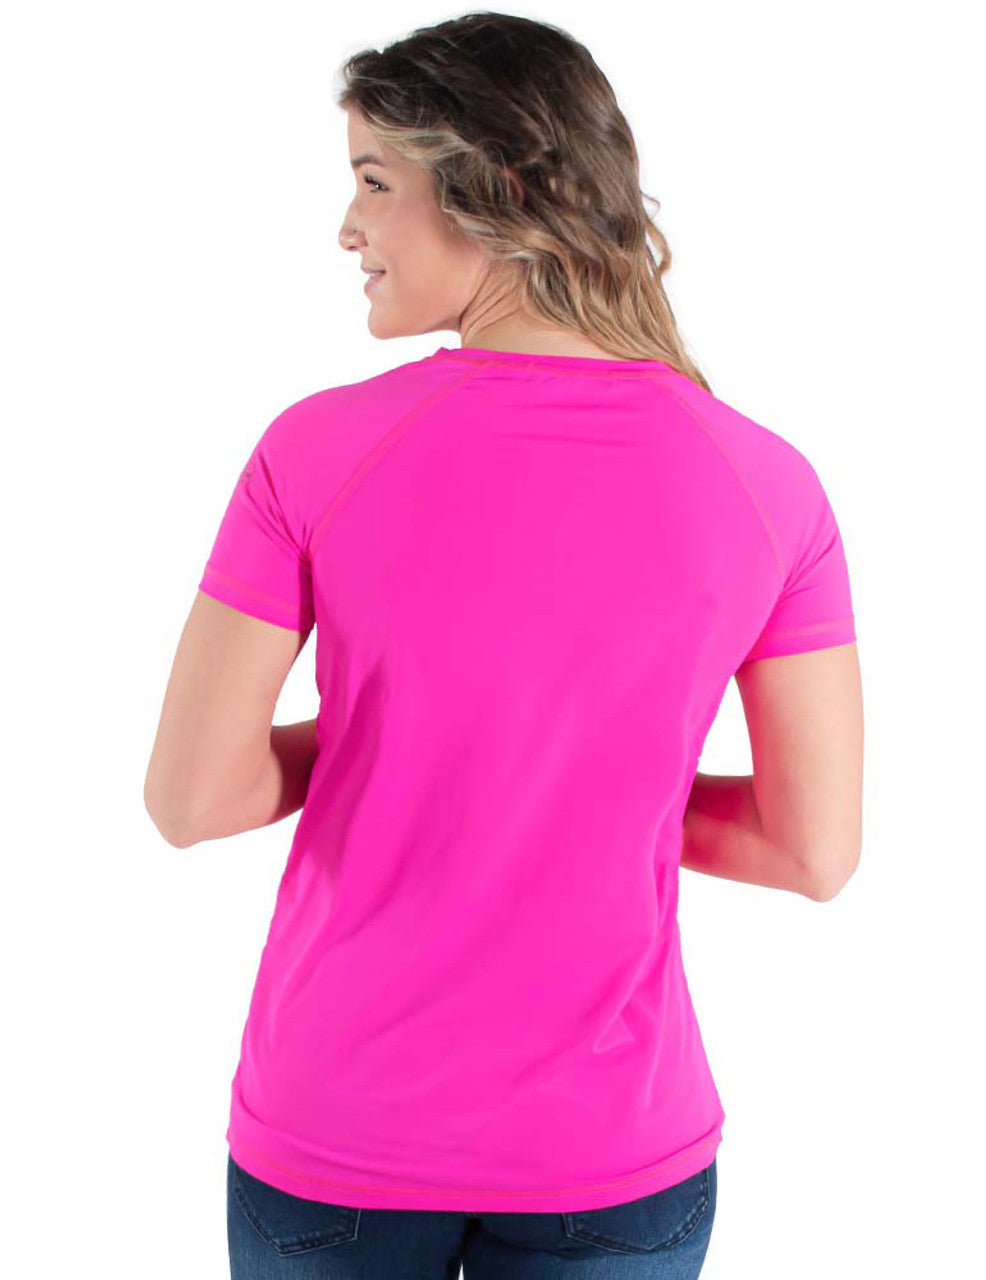 COWGIRL TUFF Women's Hot Pink Breathe Instant Cooling UPF Short Sleeve Raglan/Baseball Tee